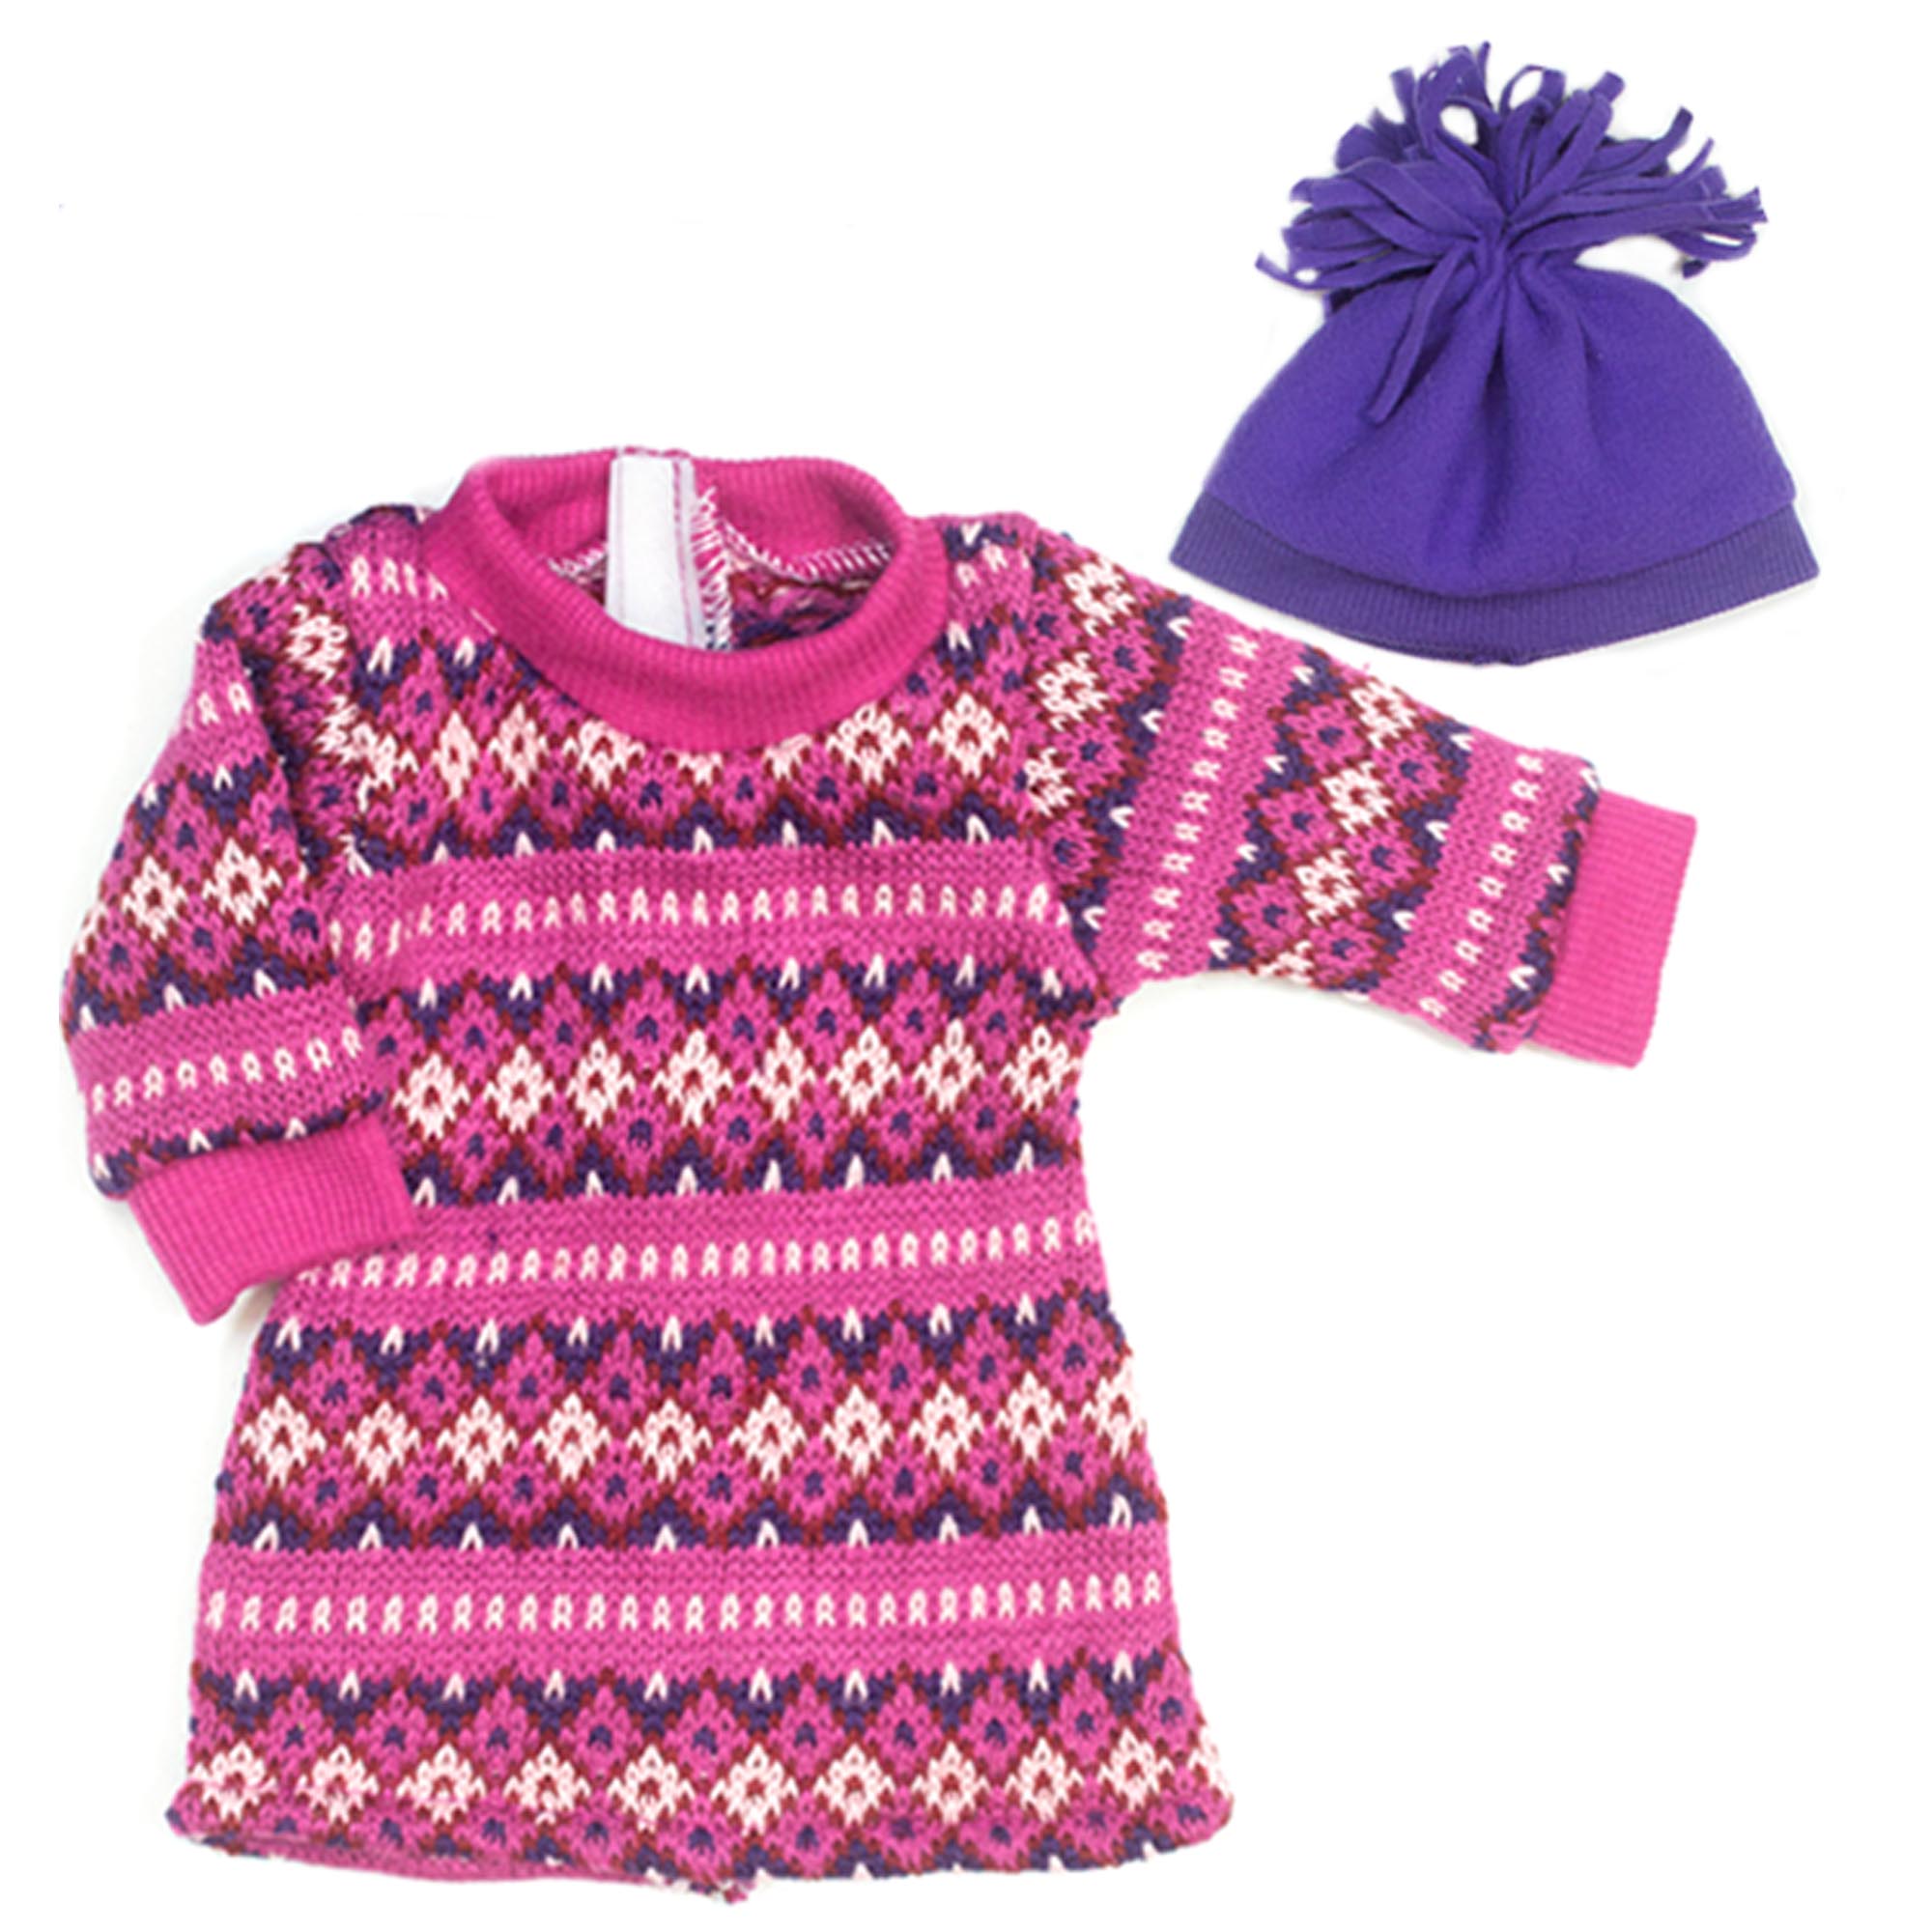 Sophia’s Mix & Match Fair Isle Pattern Knit Long-Sleeved Sweater Dress & Winter Pom-Pom Hat for 18” Dolls, Hot Pink/Purple